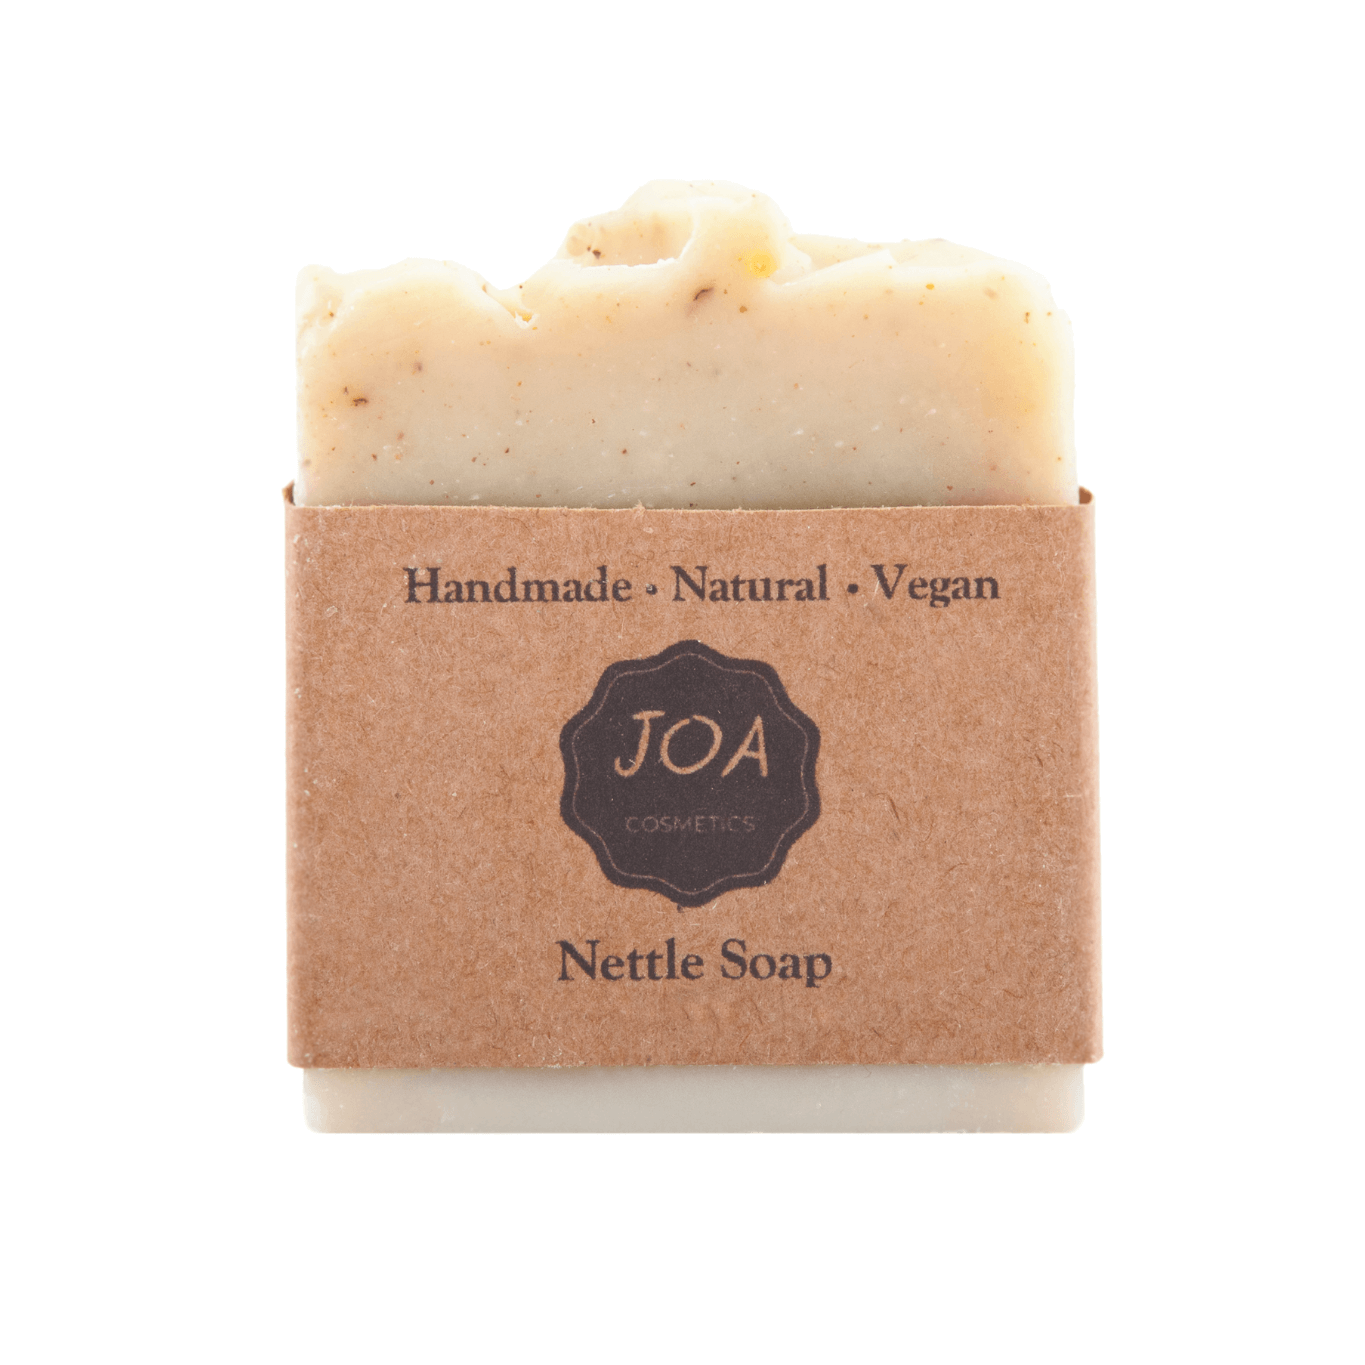 100% Natural - Handmade. Vegan - Palm Oil Free. Contains nettle oil. The best handmade soap.